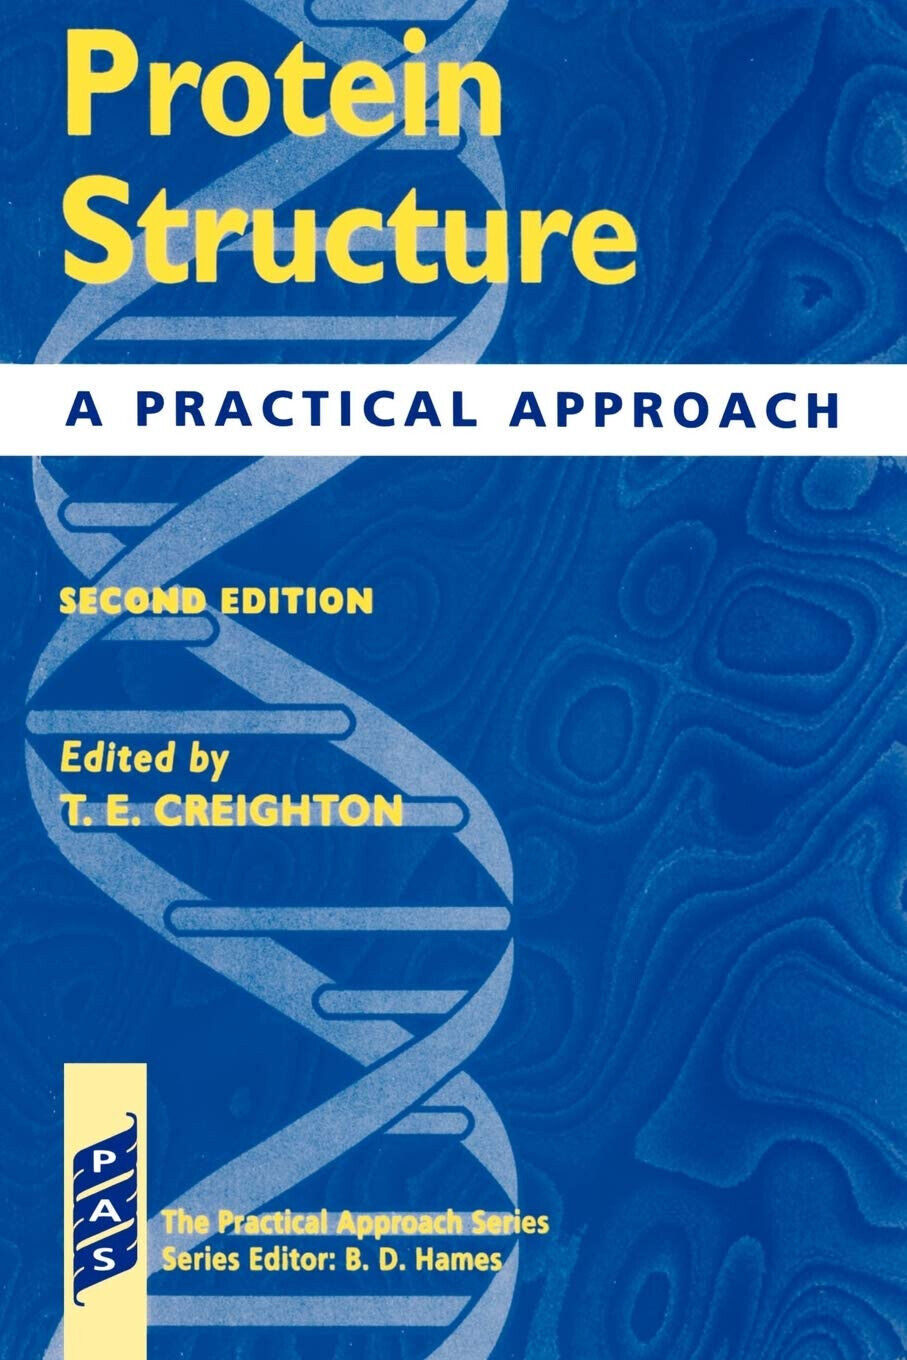 Protein Structure - A Practial Approach 2nd Edition - T. E. Creighton - 1997 libro usato